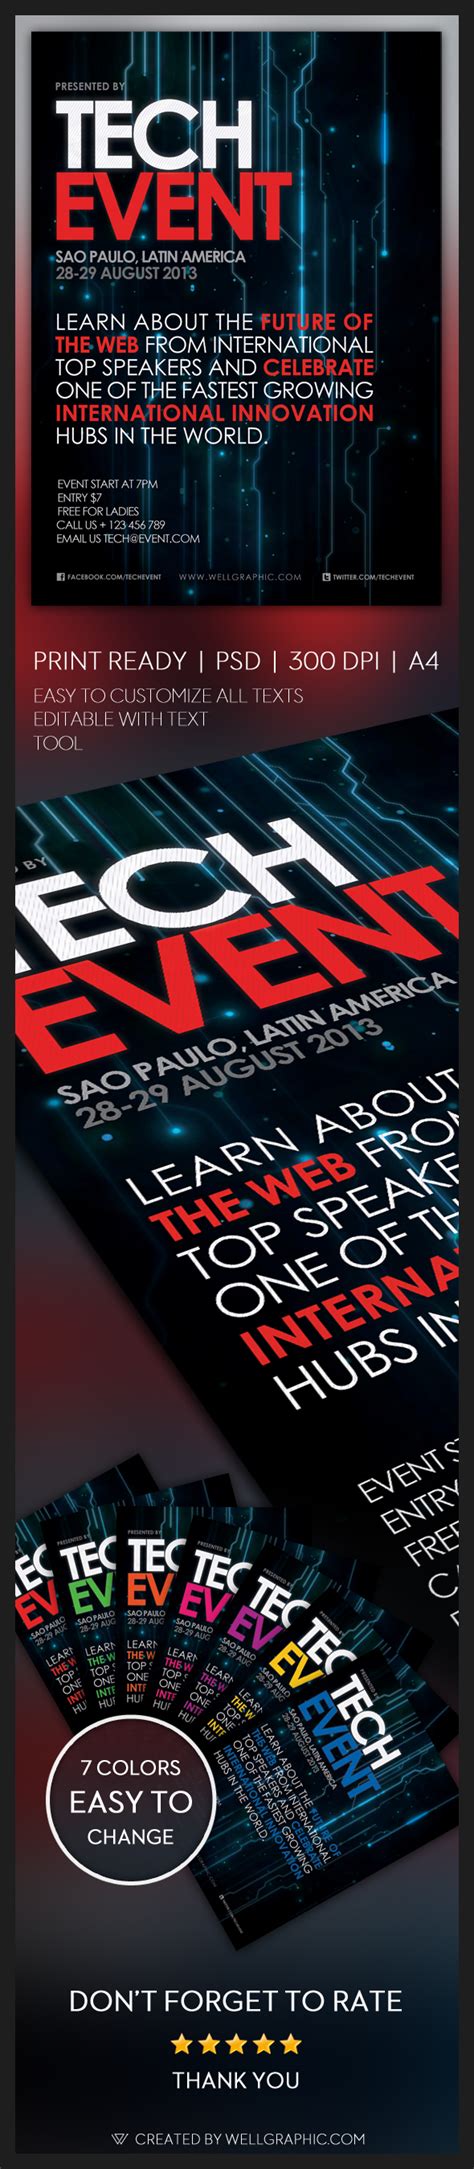 Tech Event Flyer By Wellgraphic On Deviantart